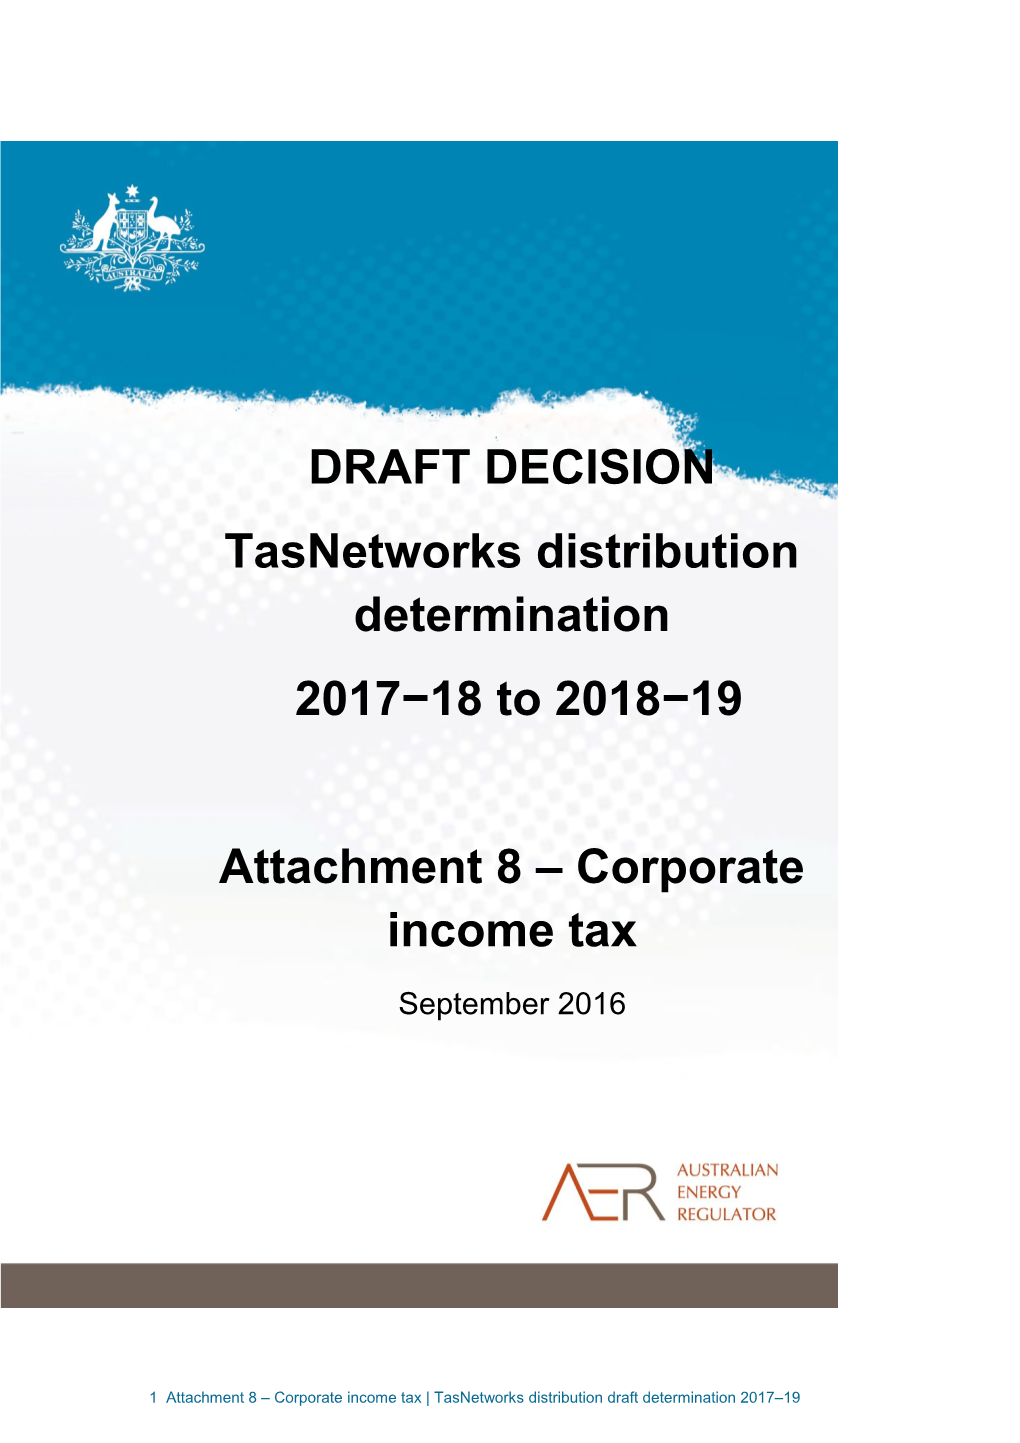 AER Draft Decision - Tasnetworks - Attachment 8 - Corporate Income Tax